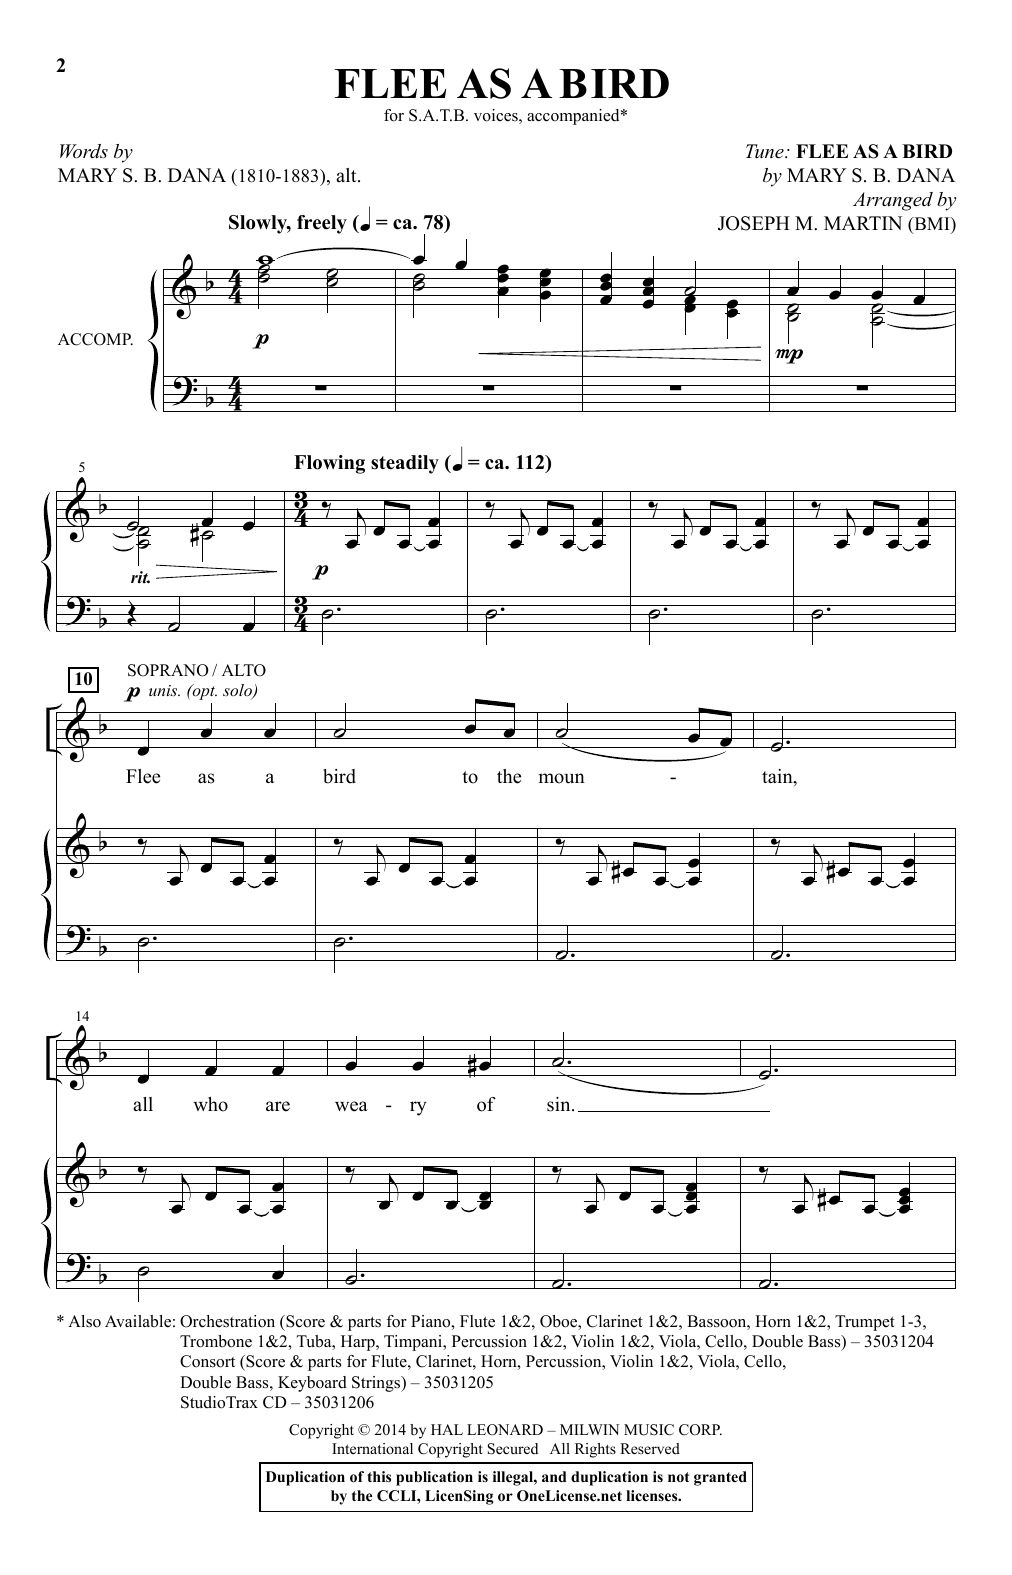 Mary S.B. Dana Flee As A Bird (arr. Joseph M. Martin) Sheet Music Notes & Chords for SATB - Download or Print PDF